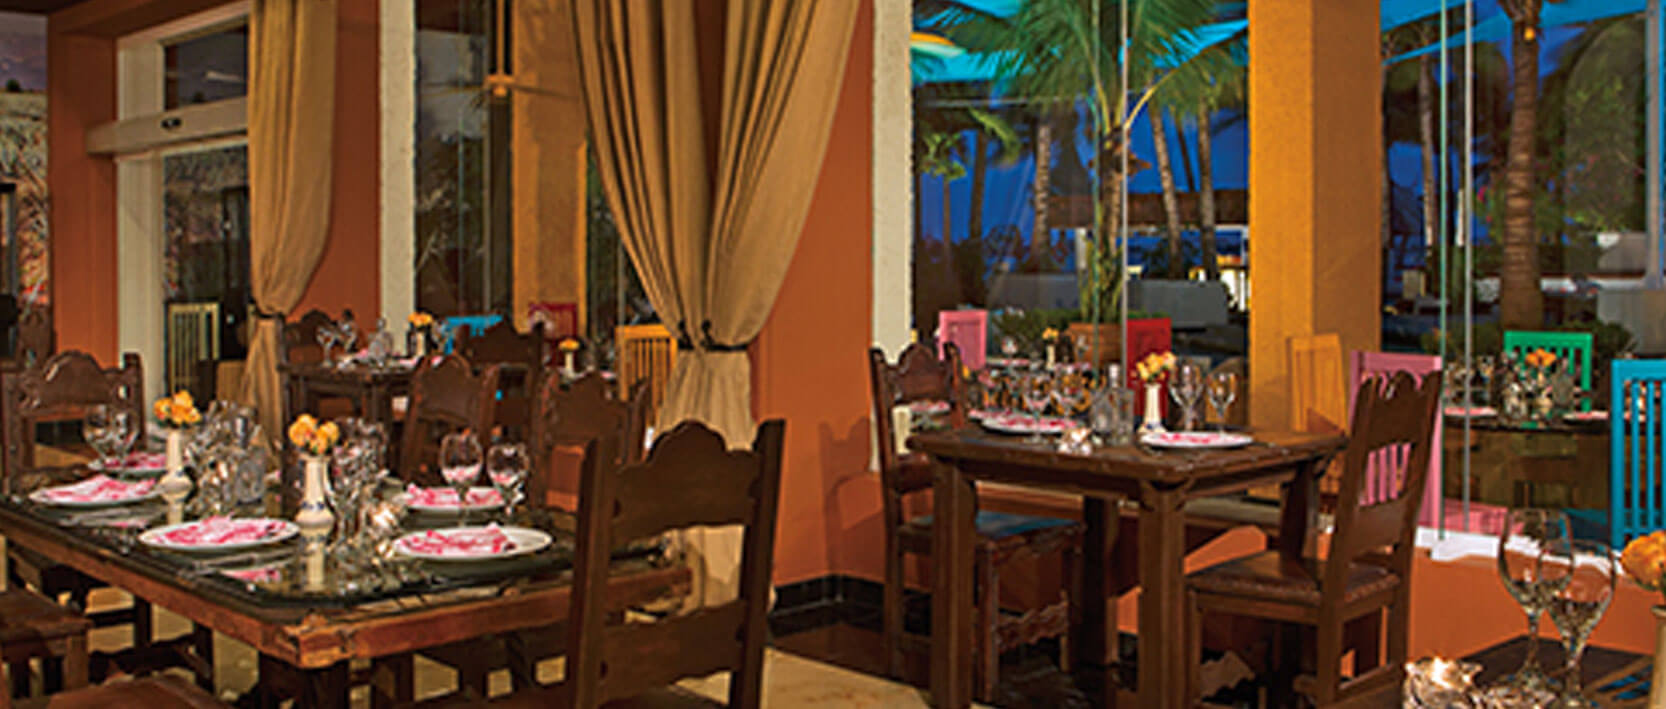 Dreams Sands Cancun Restaurants and Bars - Oceana